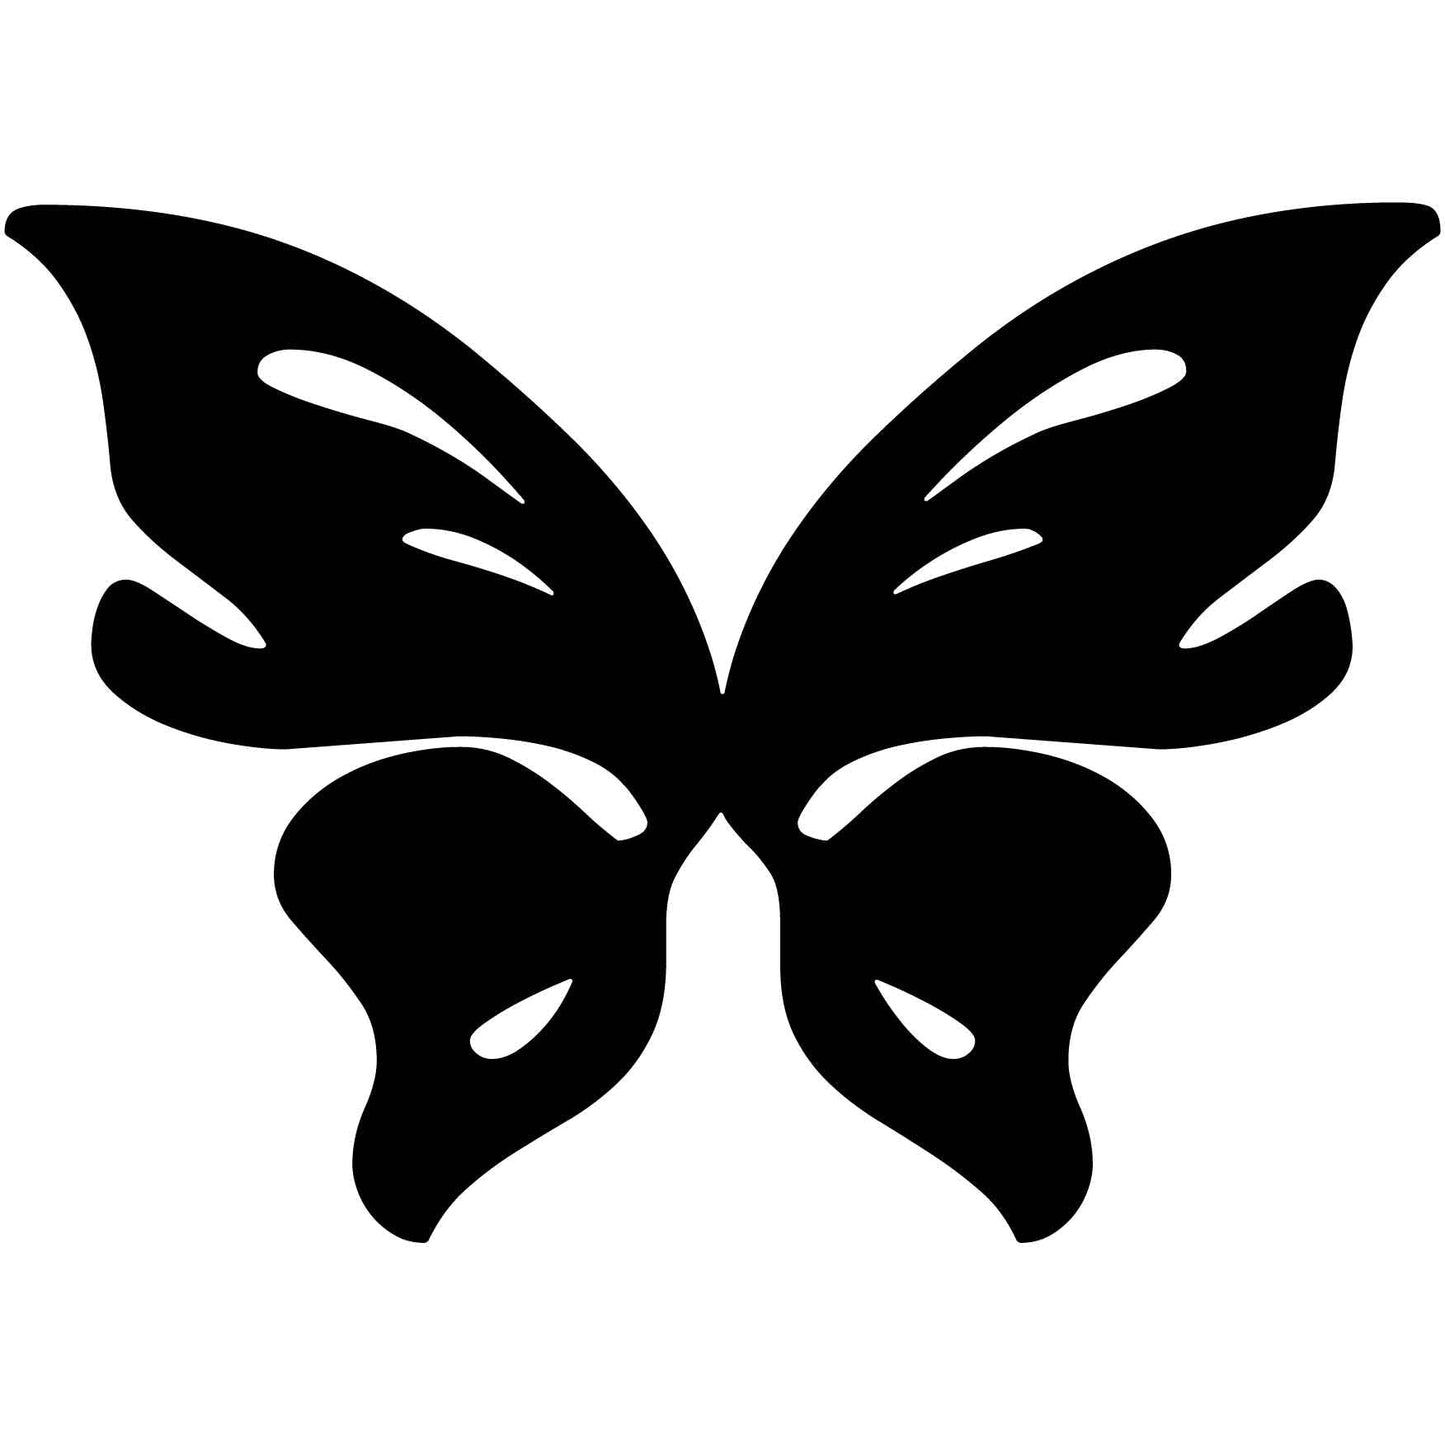 Butterfly Ornaments Decor-DXF files Cut Ready CNC Designs-dxfforcnc.com